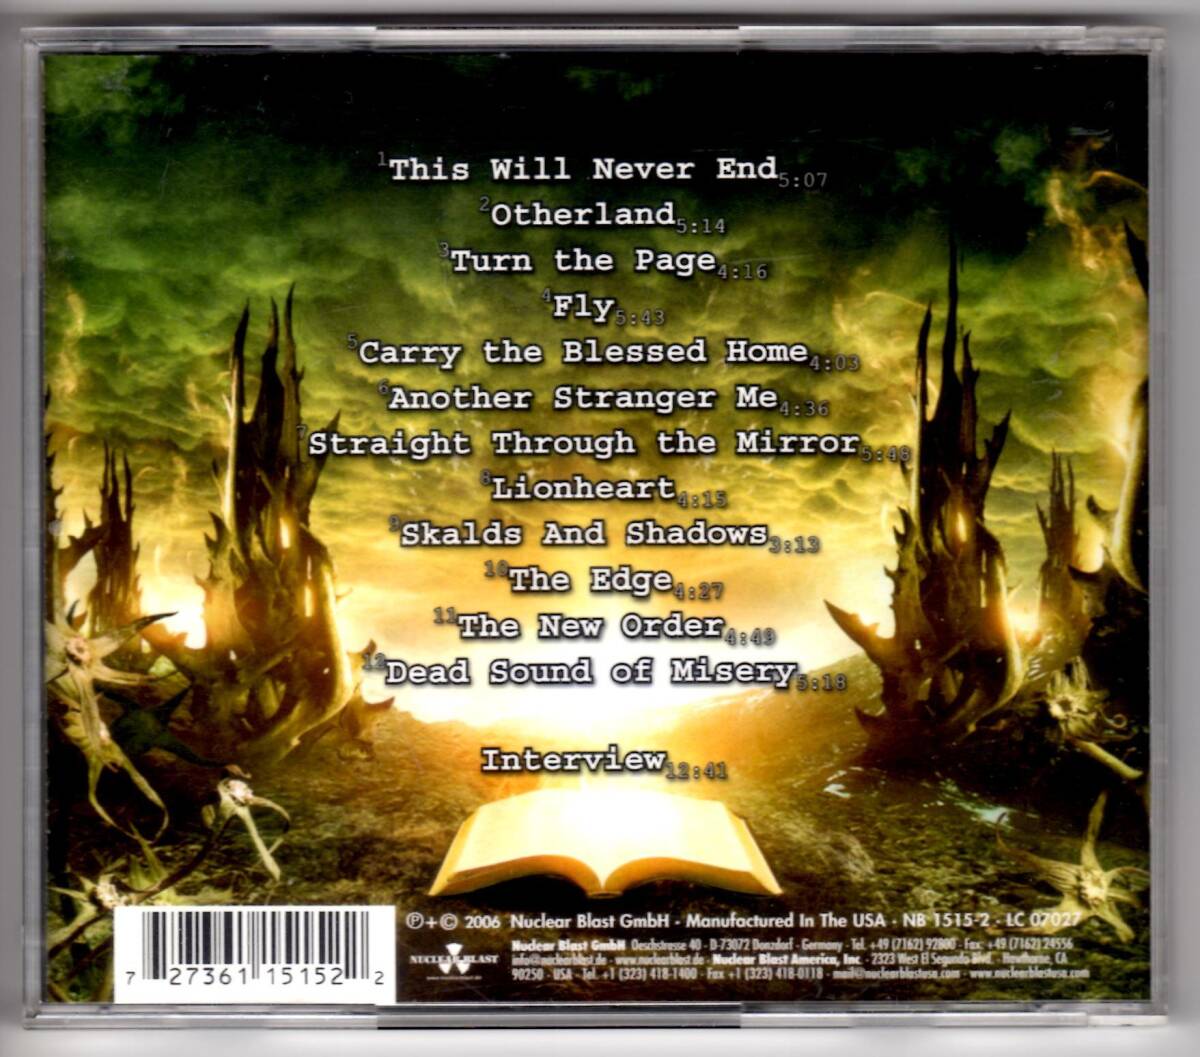 Used CD 輸入盤 ブラインド・ガーディアン BLIND GUARDIAN『ア・トゥイスト・イン・ザ・ミス』- A Twist in the Myth(2006年) 全12曲US盤_画像2